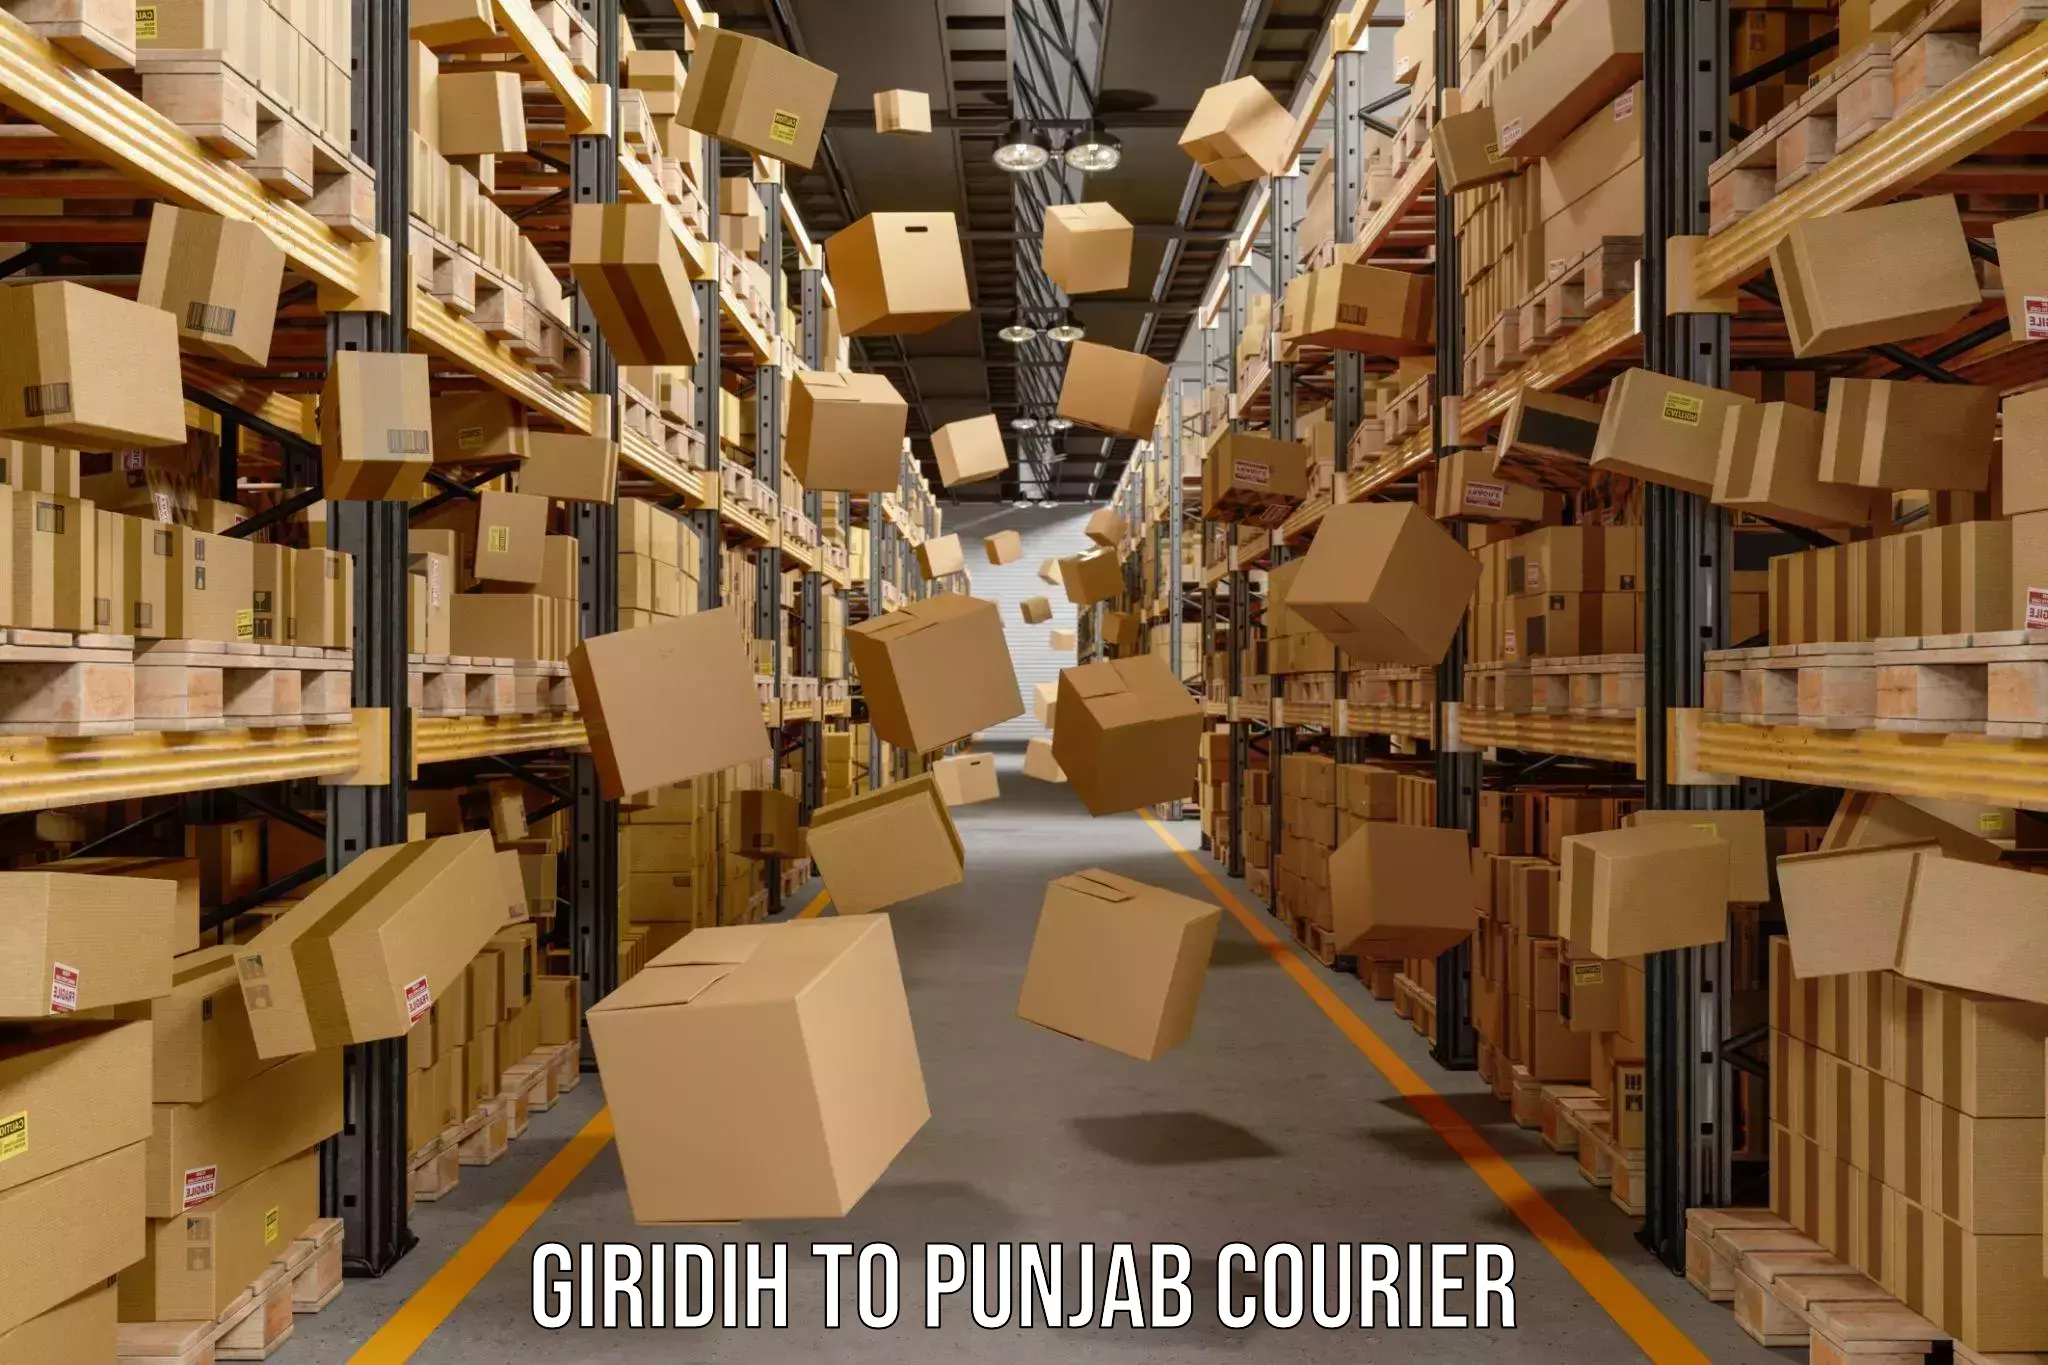 Courier service comparison Giridih to Kapurthala